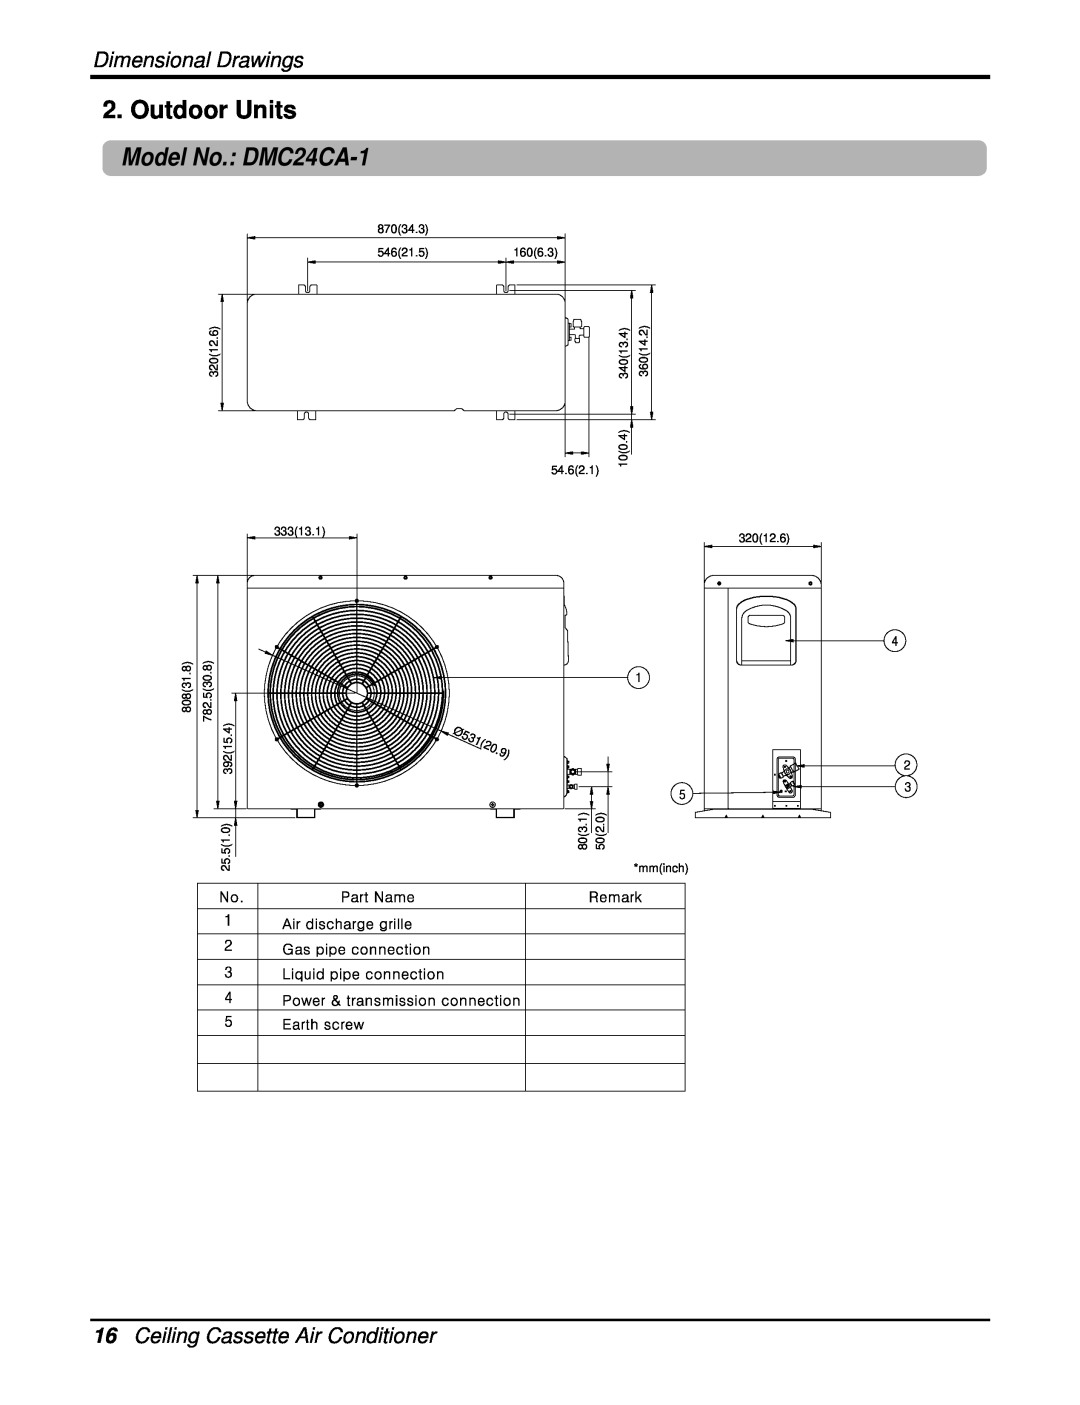 Heat Controller DMC36CA-1 Outdoor Units, Model No. DMC24CA-1, 16Ceiling Cassette Air Conditioner, Dimensional Drawings 